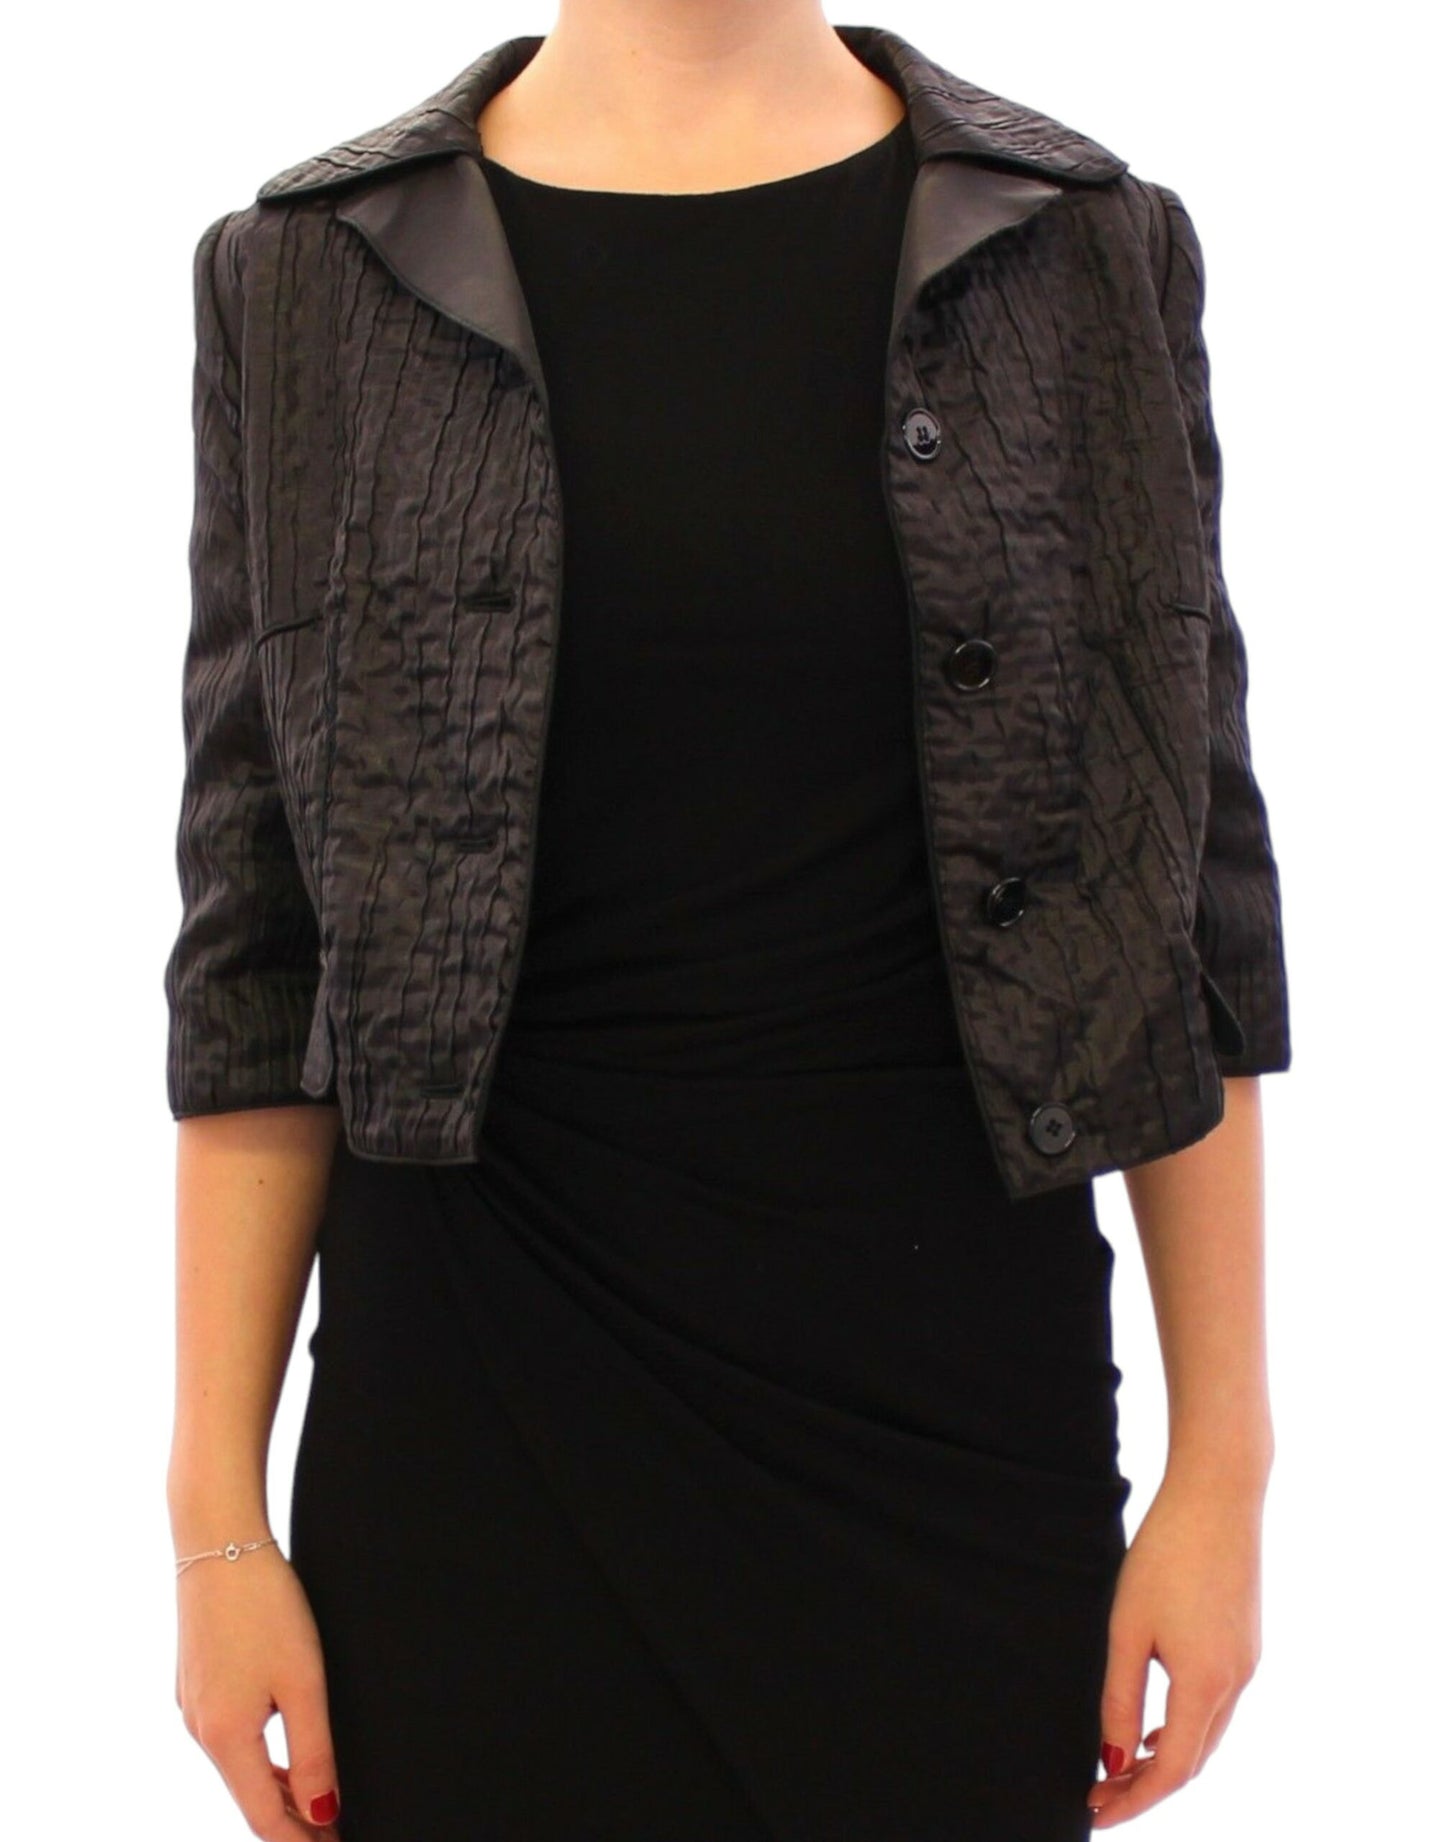 Dolce &amp; Gabbana Black Short Bolero Shrug Jacket Coat